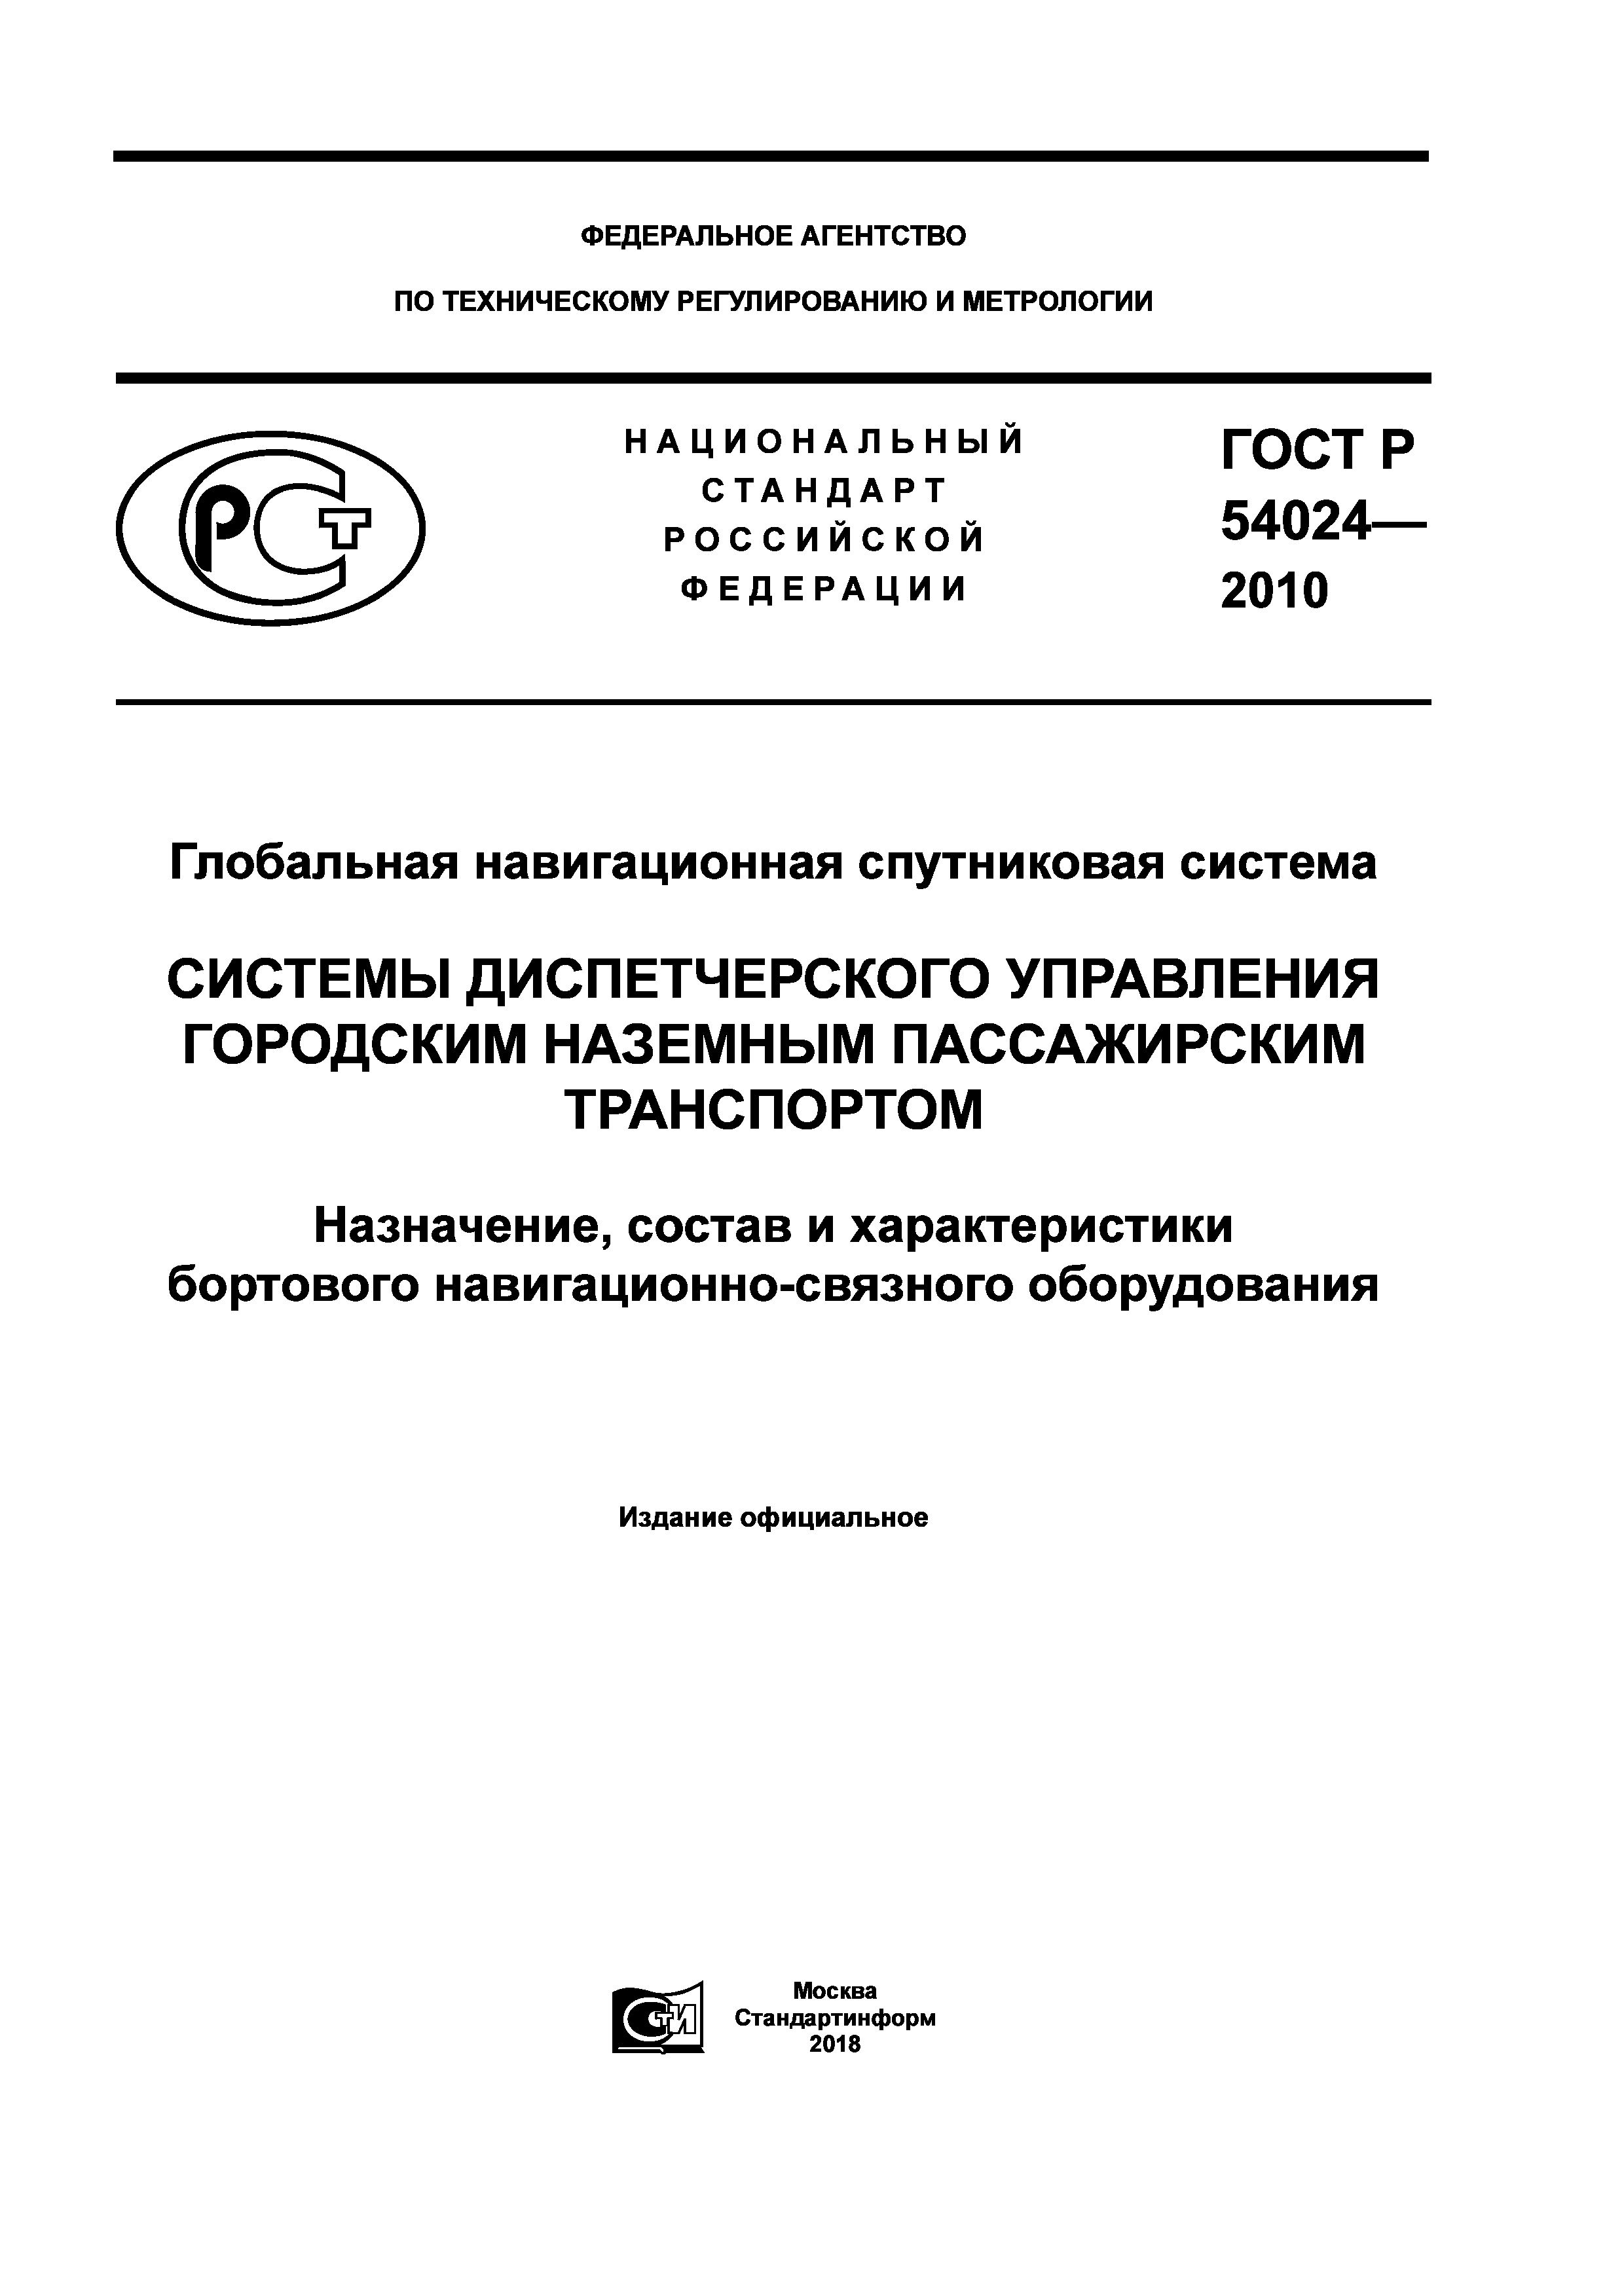 ГОСТ Р 54024-2010